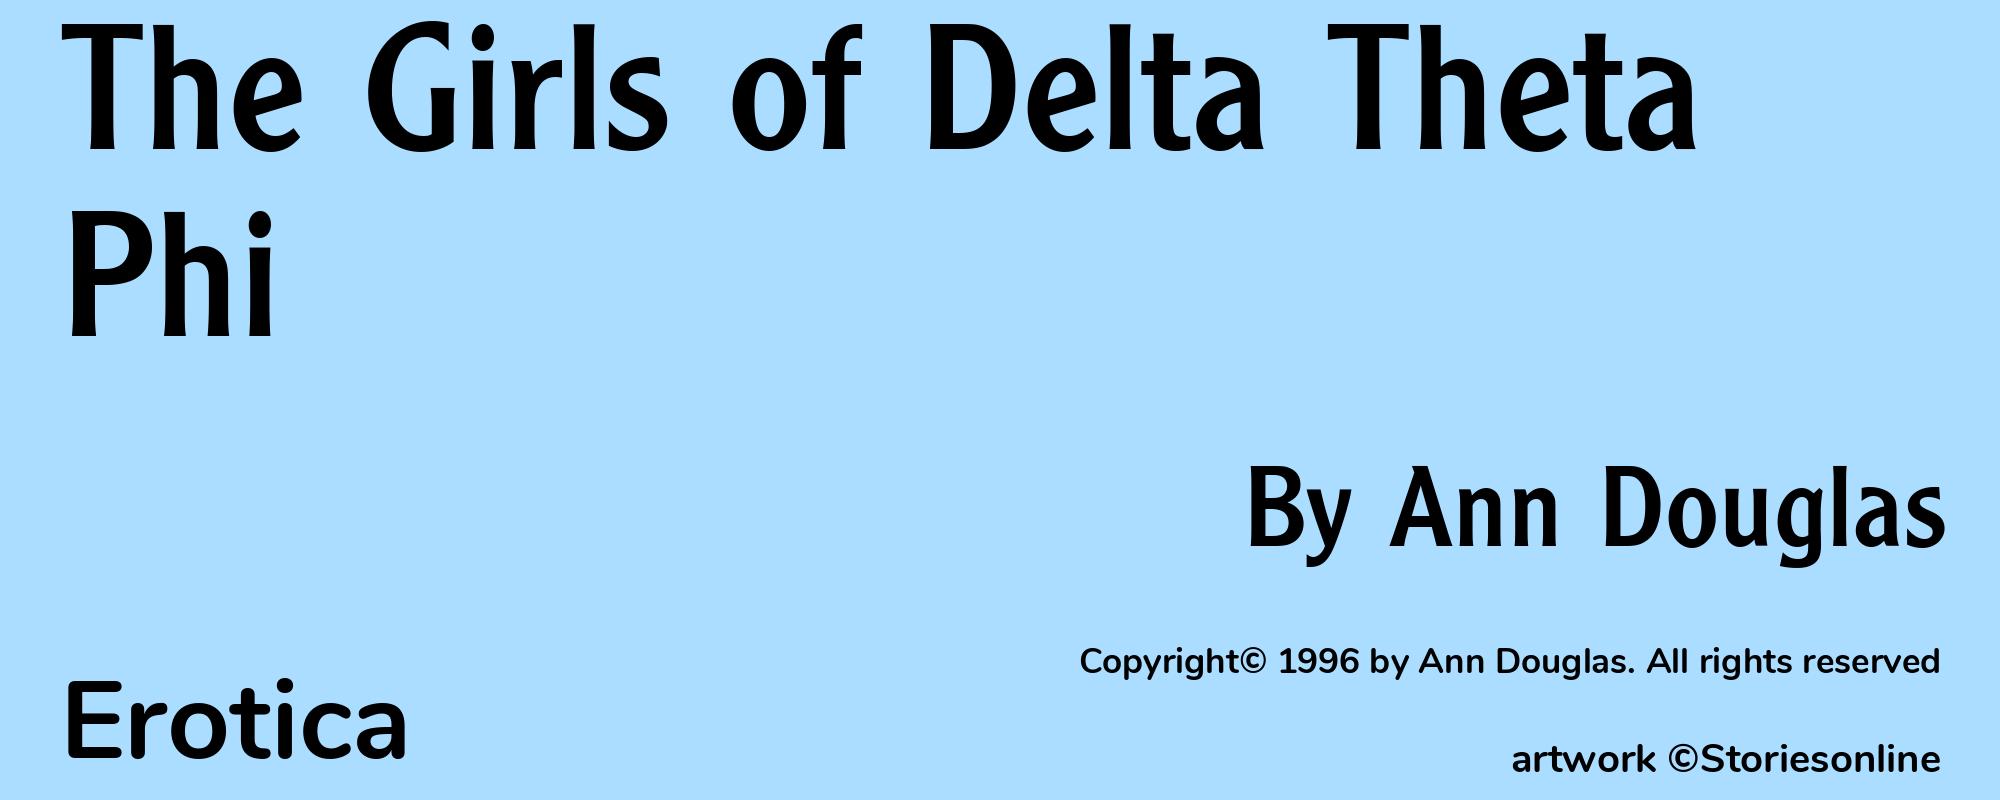 The Girls of Delta Theta Phi - Cover